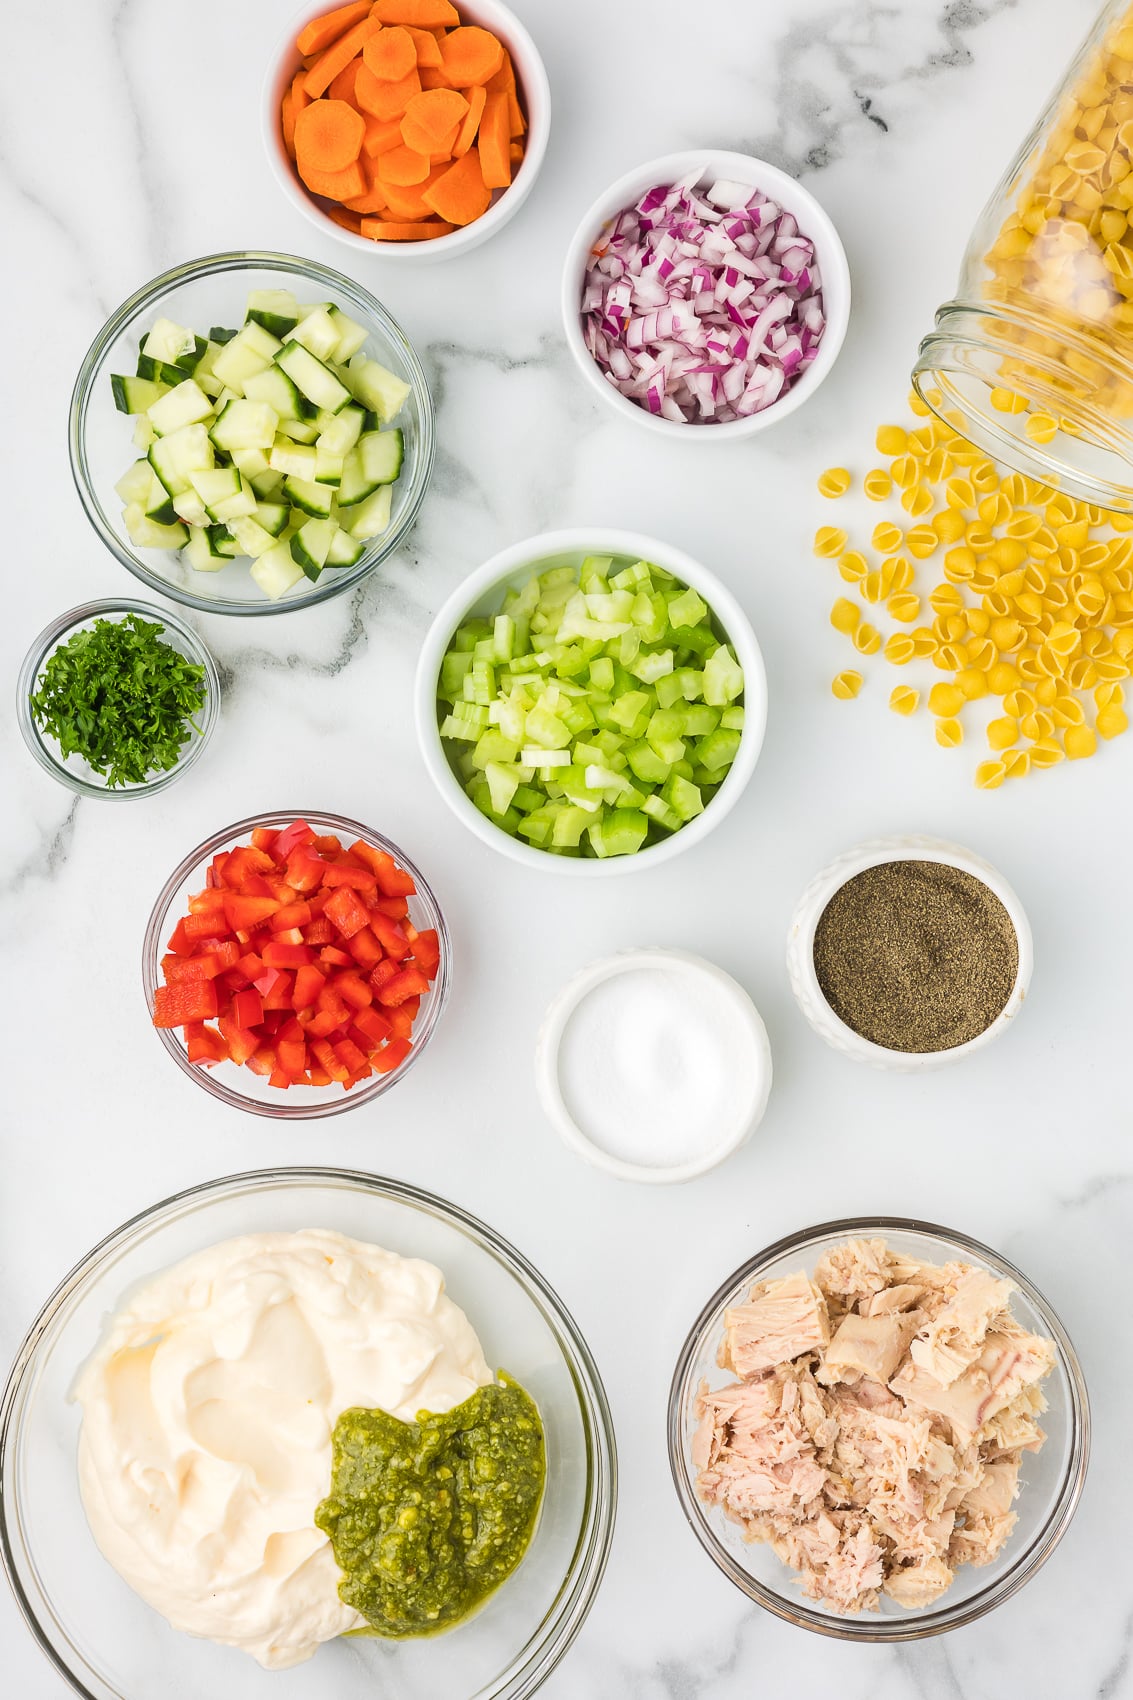 Ingredients on the countertop to make Pesto Pasta Tuna Salad.